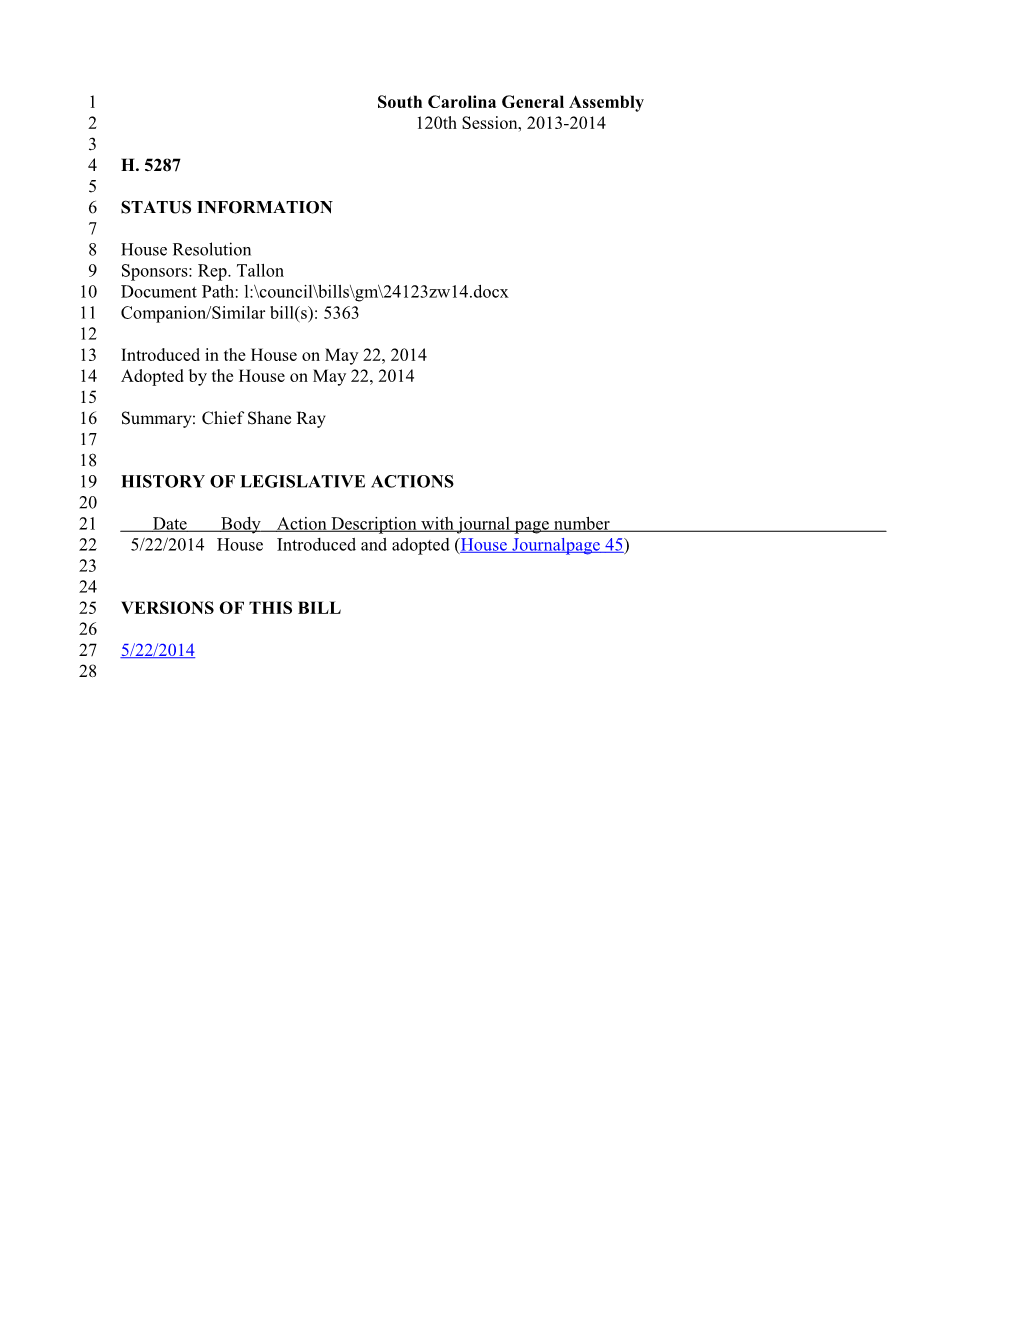 2013-2014 Bill 5287: Chief Shane Ray - South Carolina Legislature Online